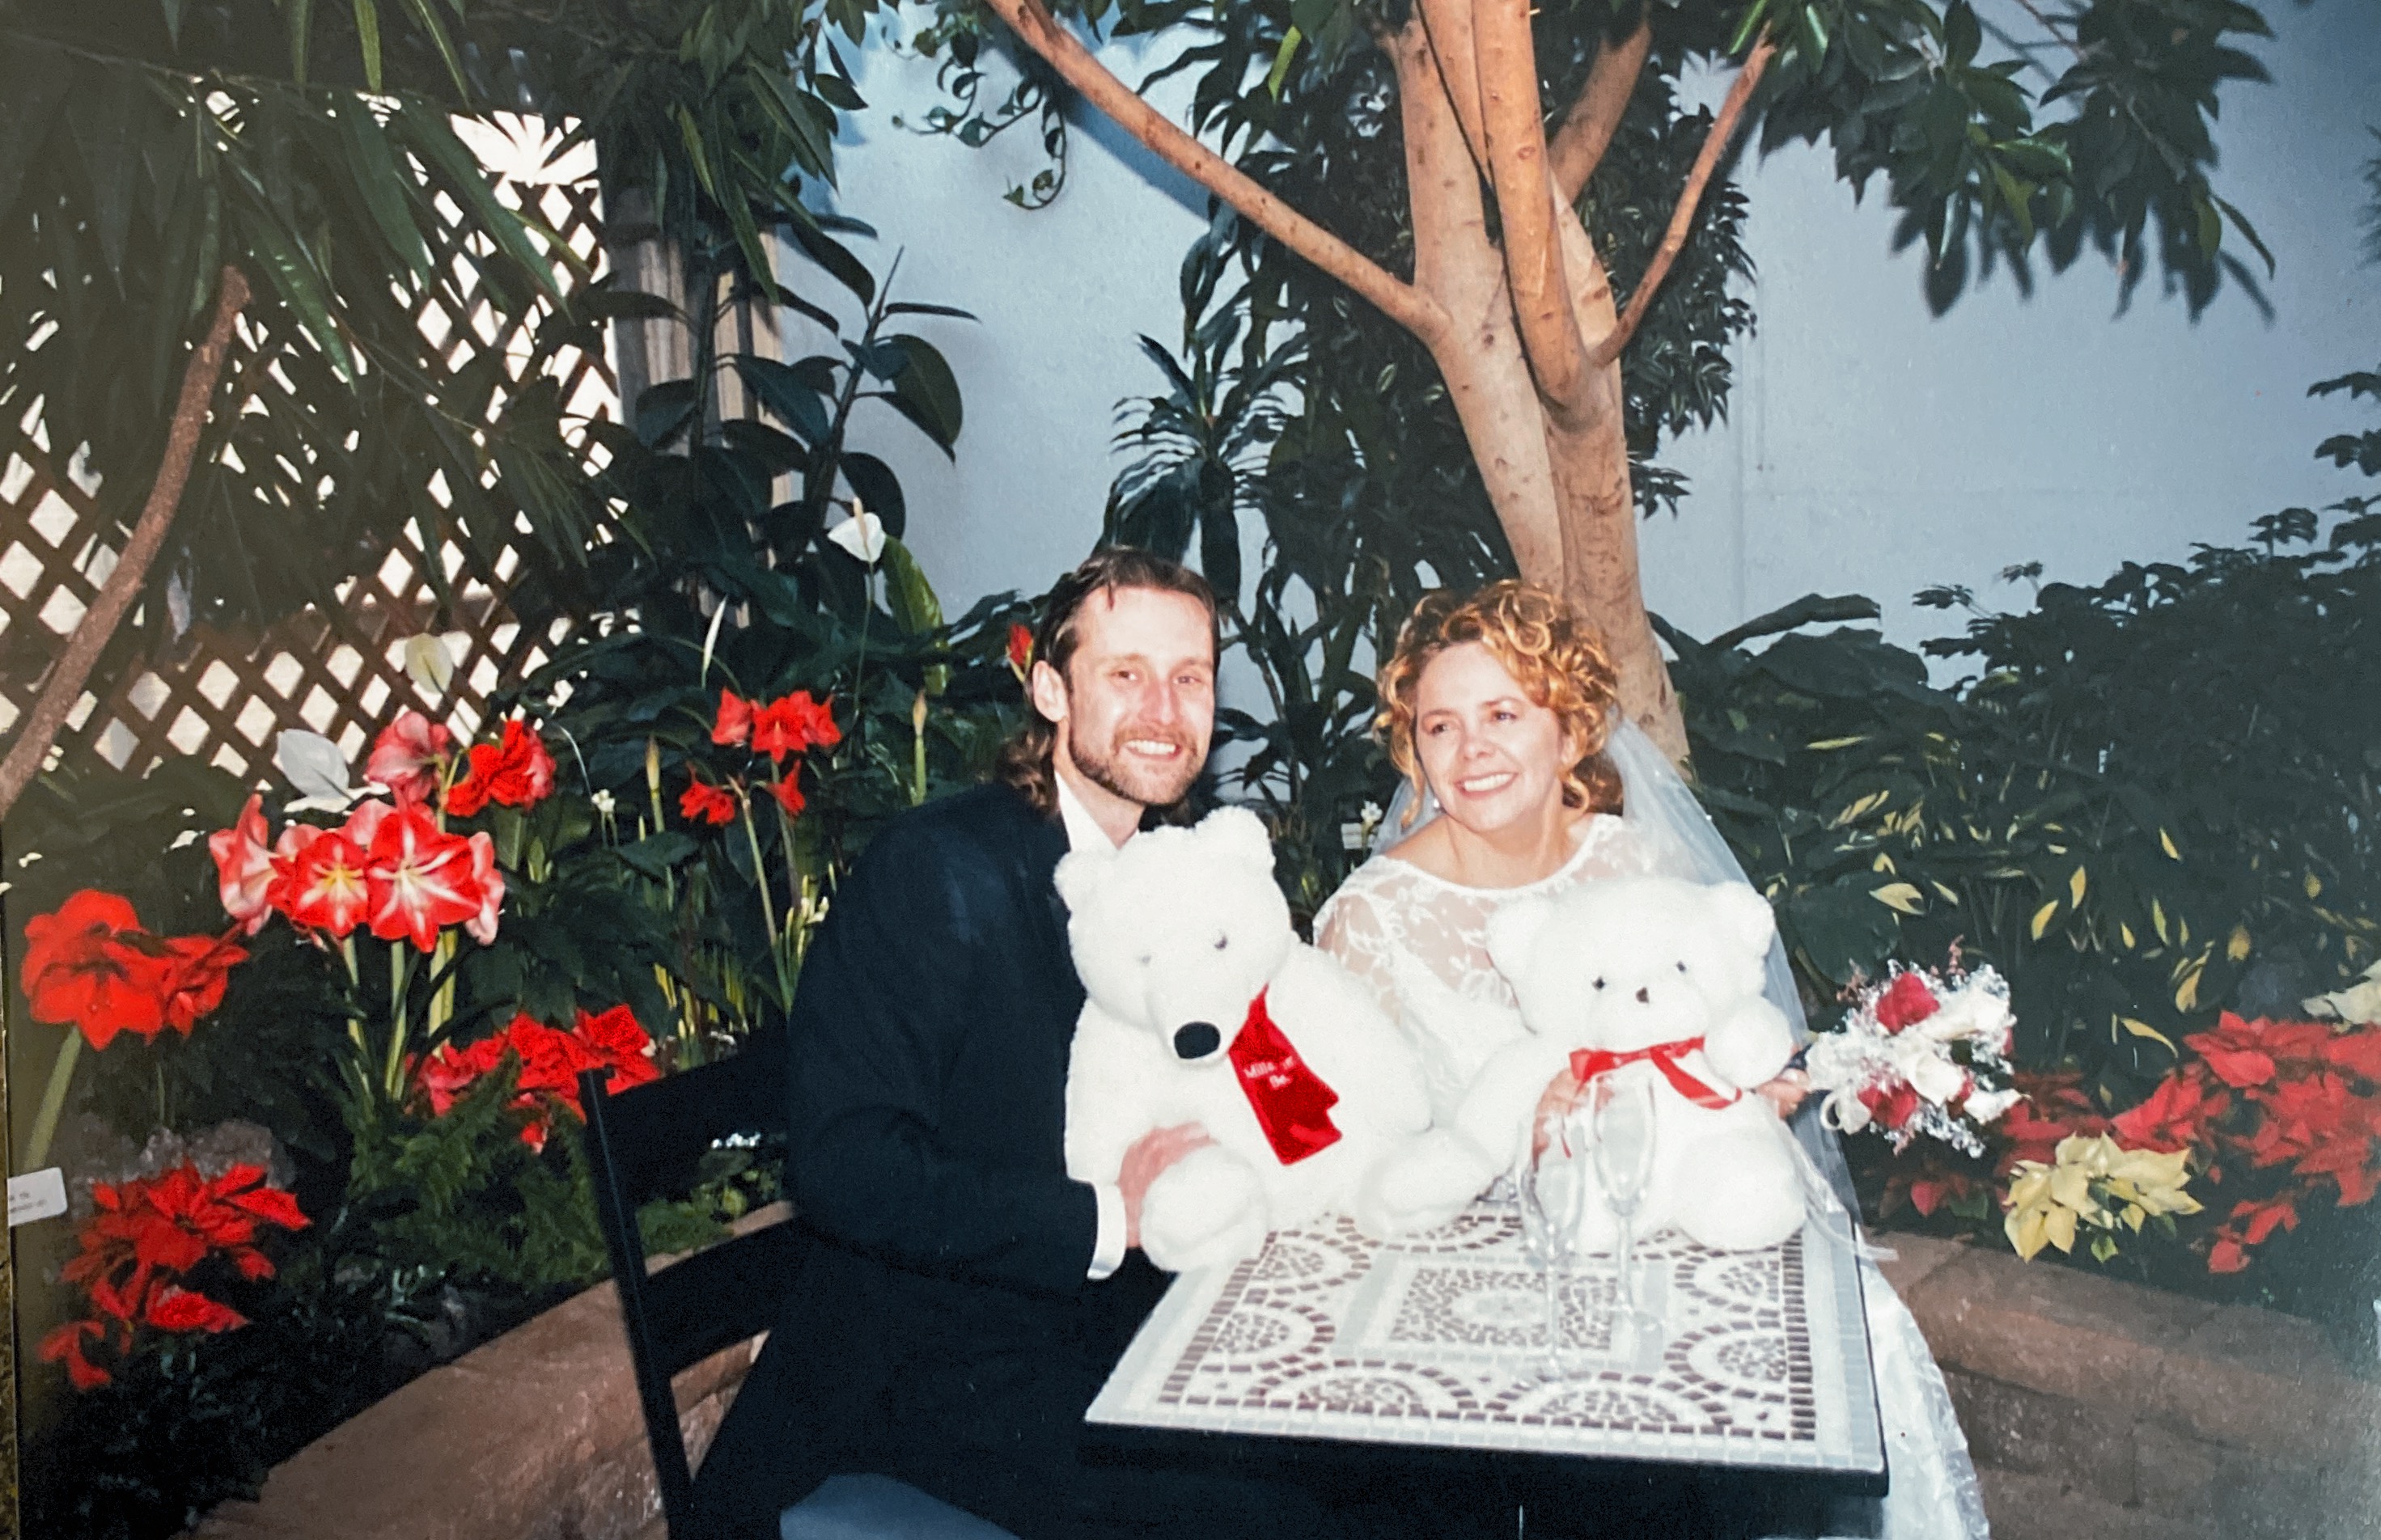 Wedding Day, December 21, 2001